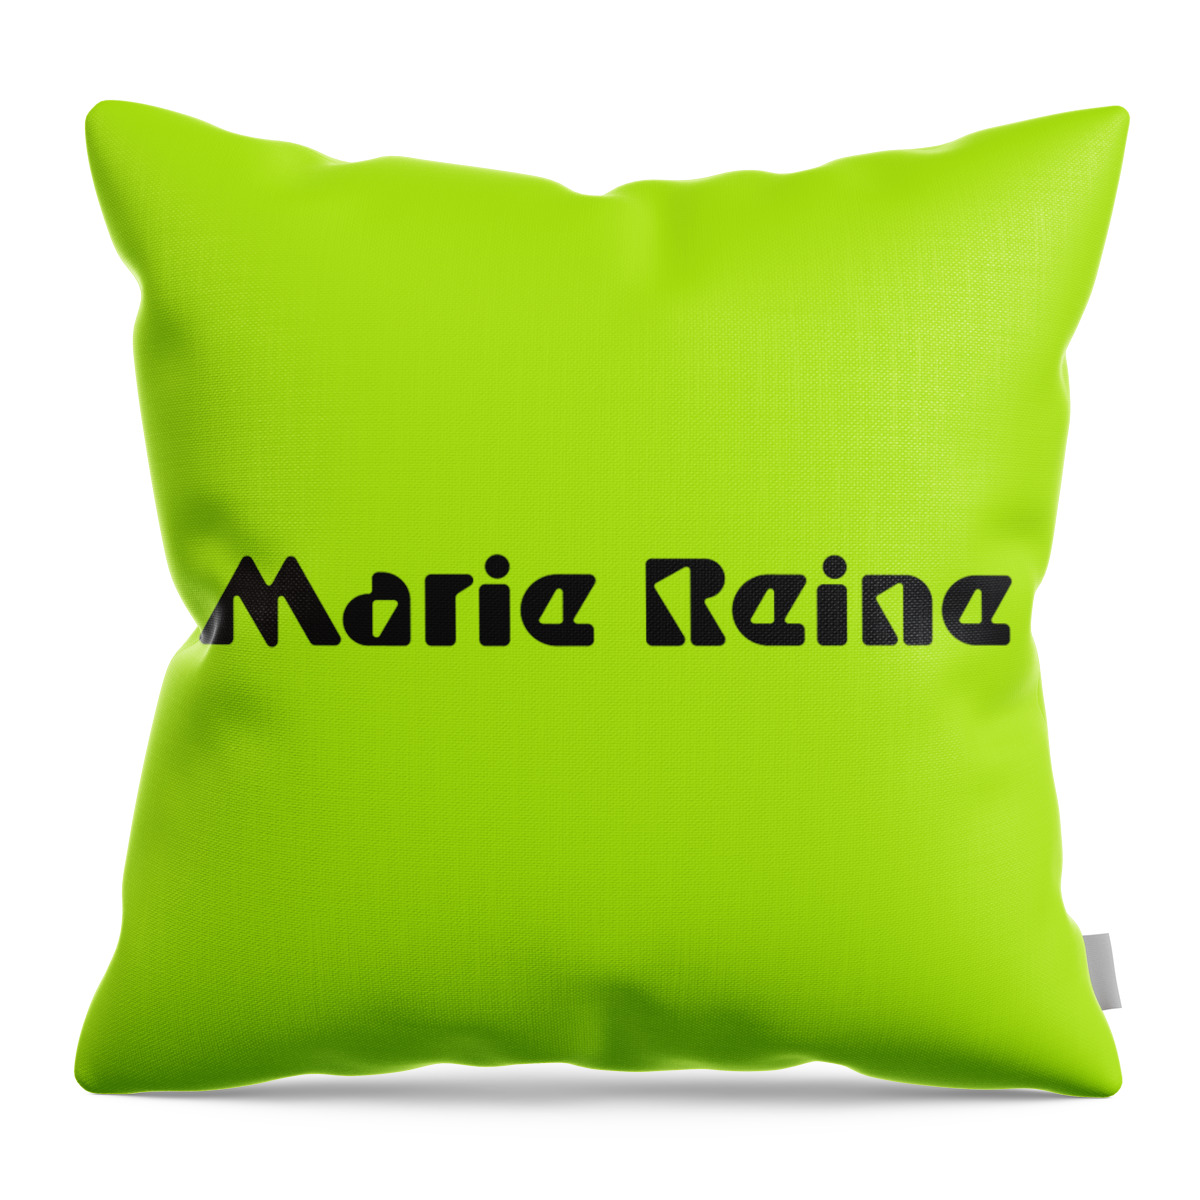 Marie Reine Throw Pillow featuring the digital art Marie Reine by TintoDesigns